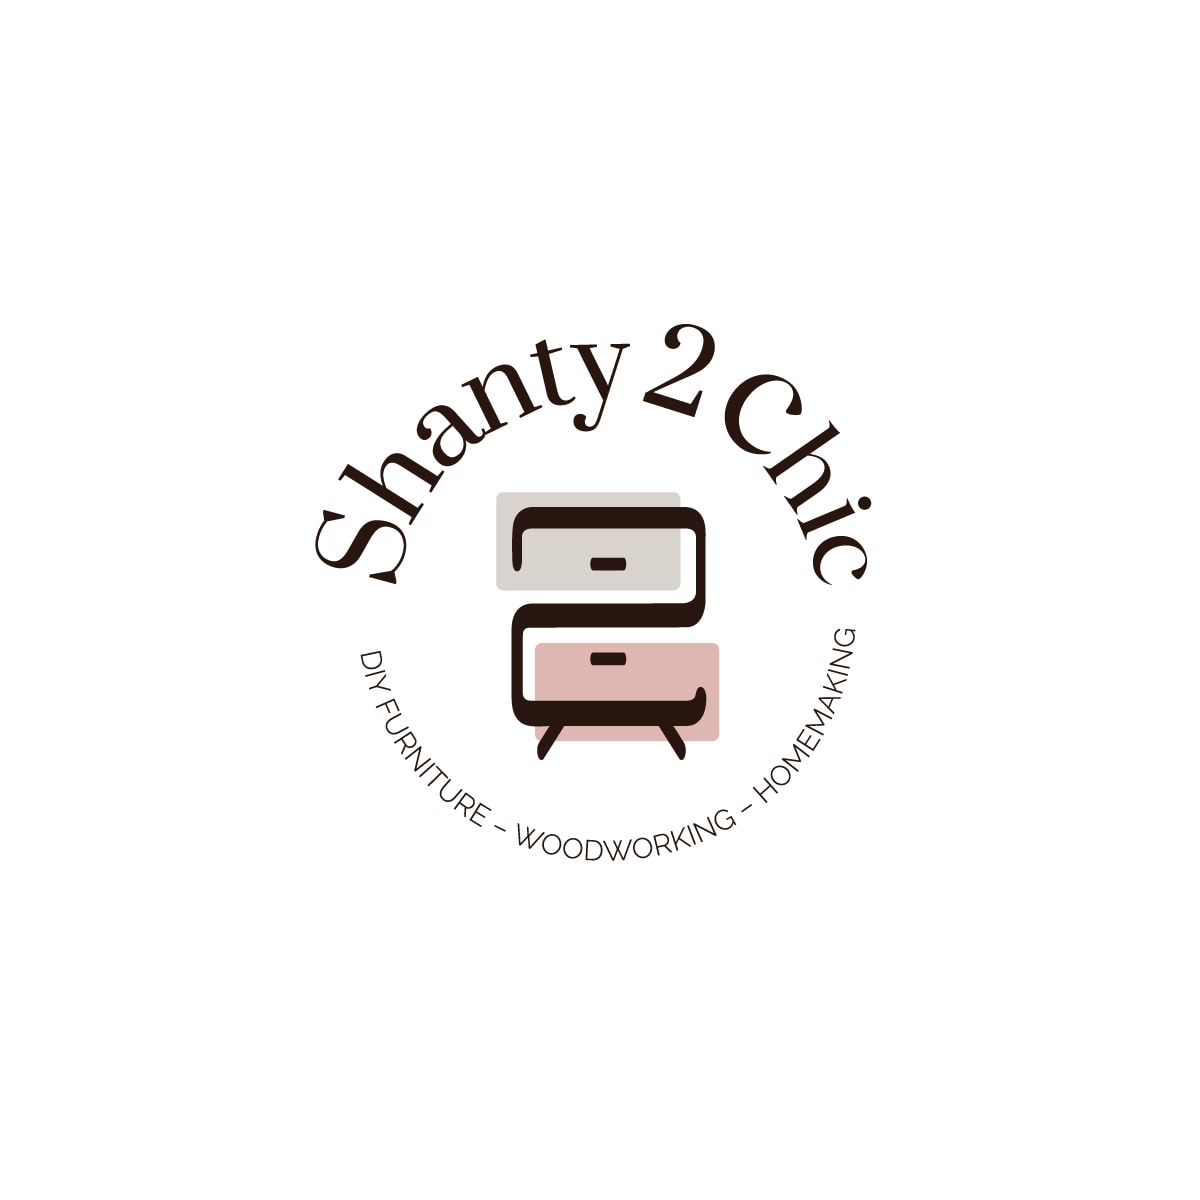 Shanty 2 Chic Blog Submark Logo full color